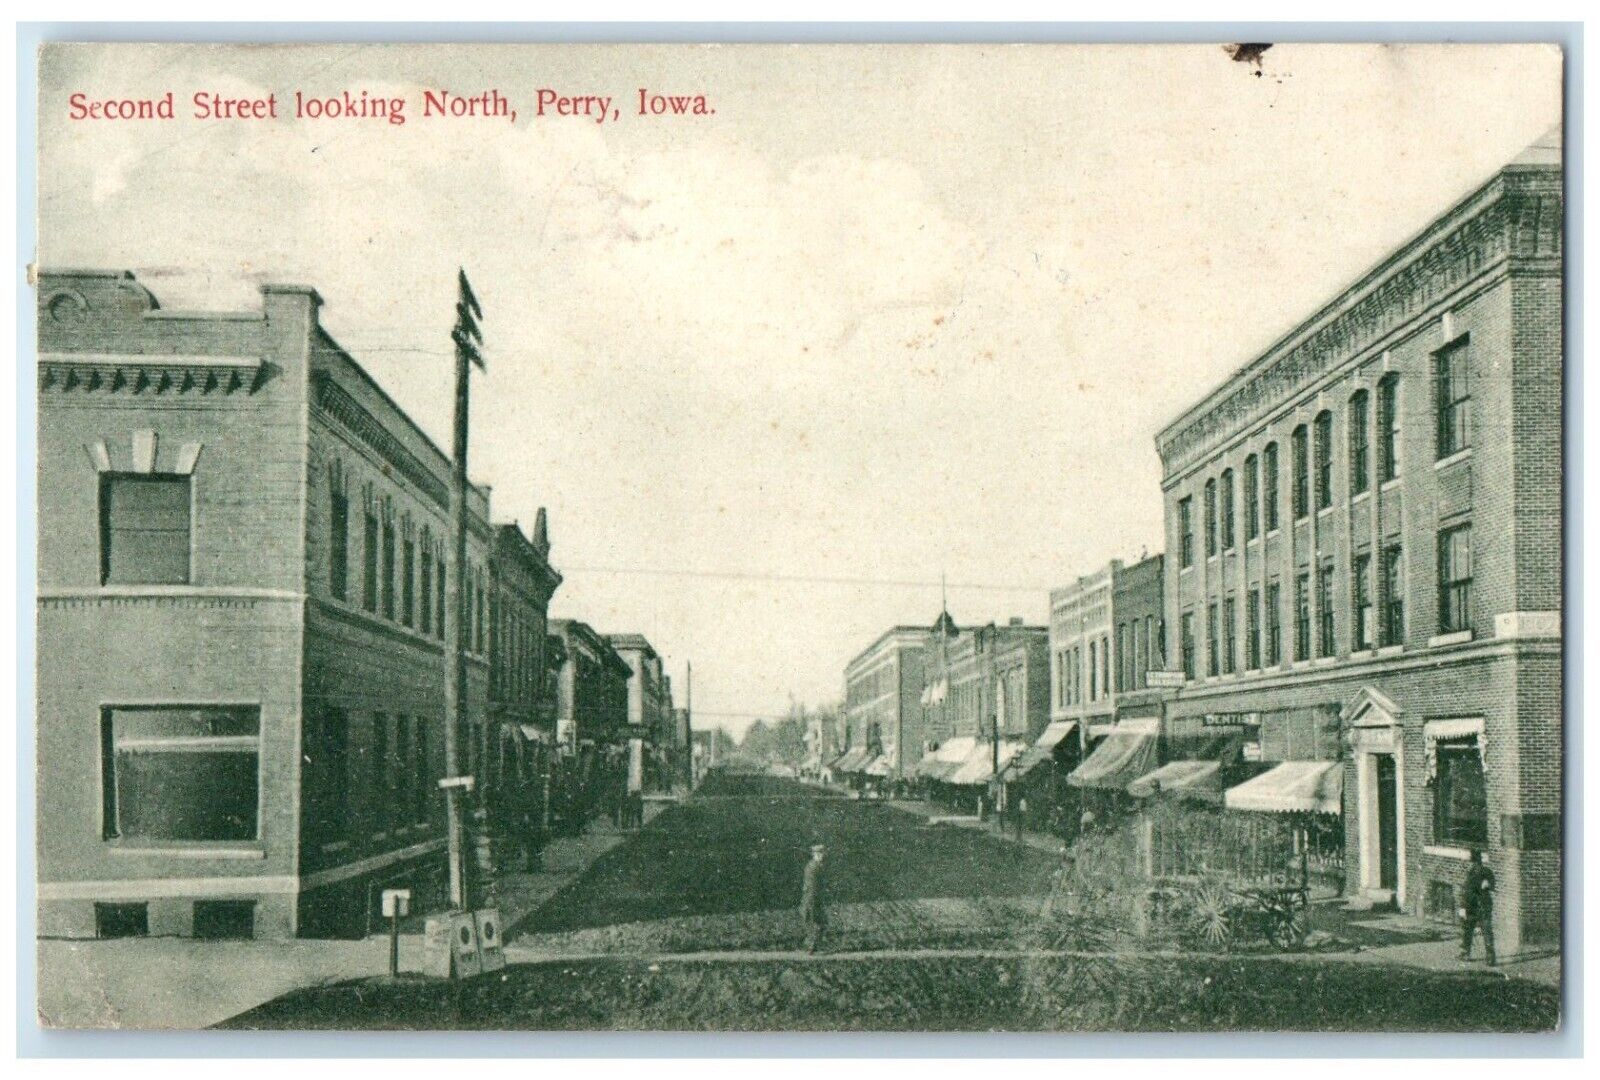 c1910 Second Street Looking North Buildings Road Perry Iowa IA Vintage Postcard